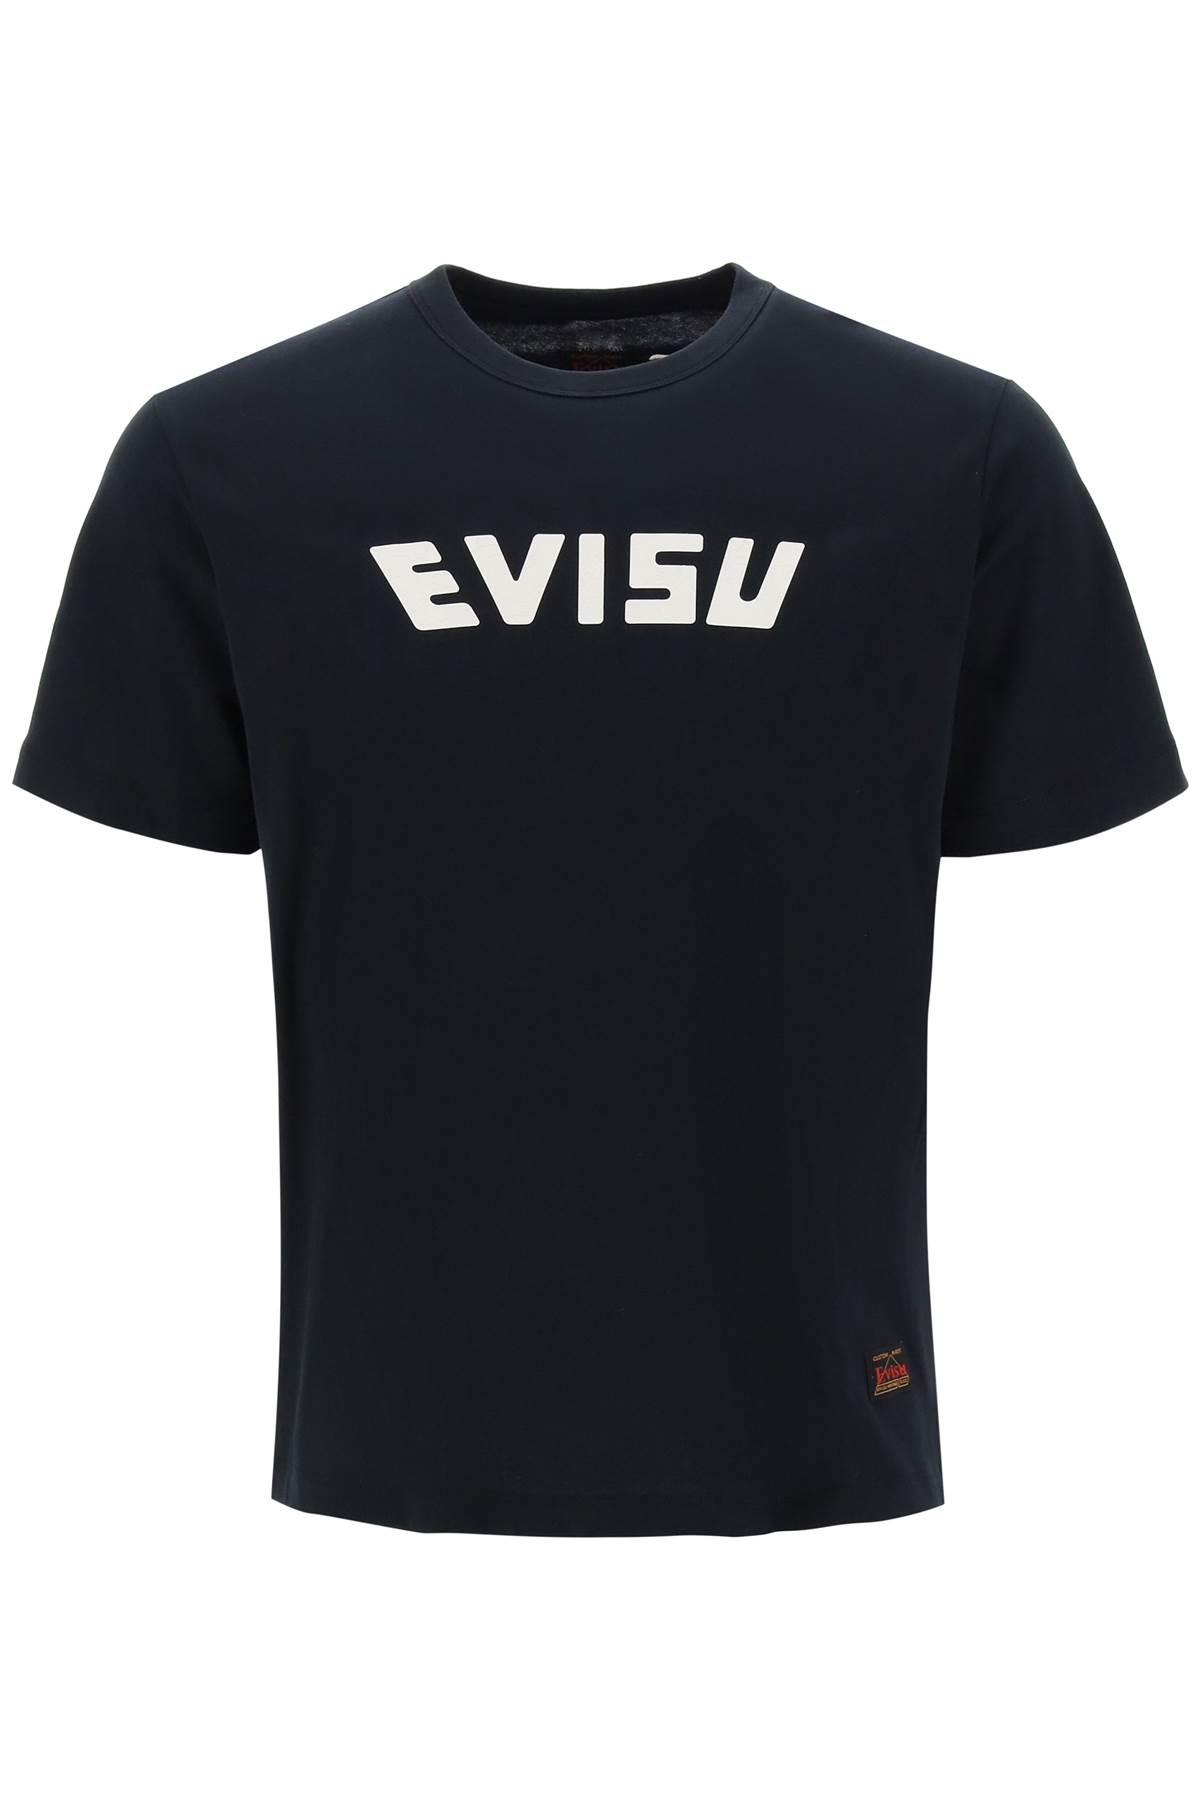 EVISU CREW-NECK T-SHIRT WITH PRINTS